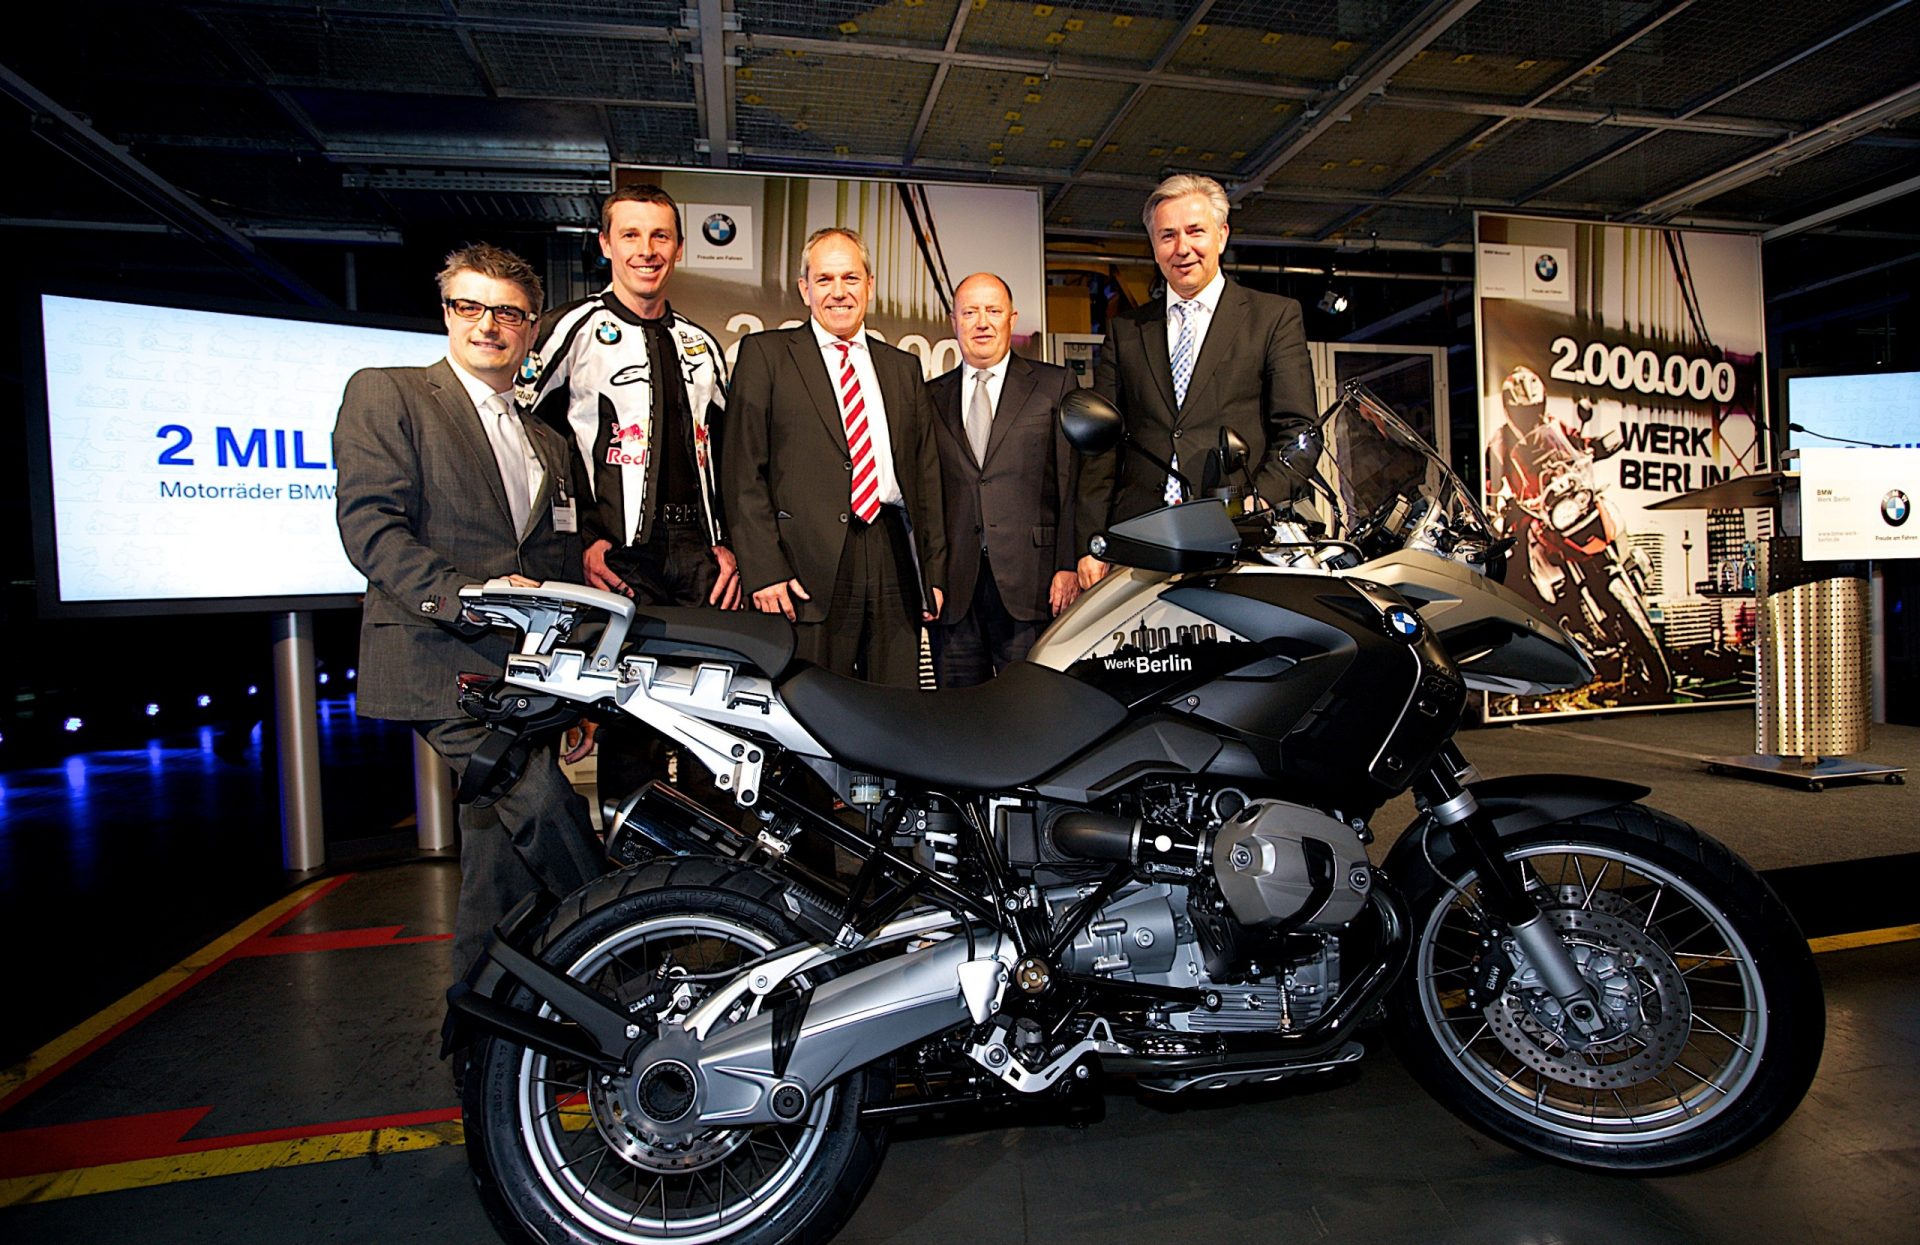 Celebrating two million BMW motorcycles